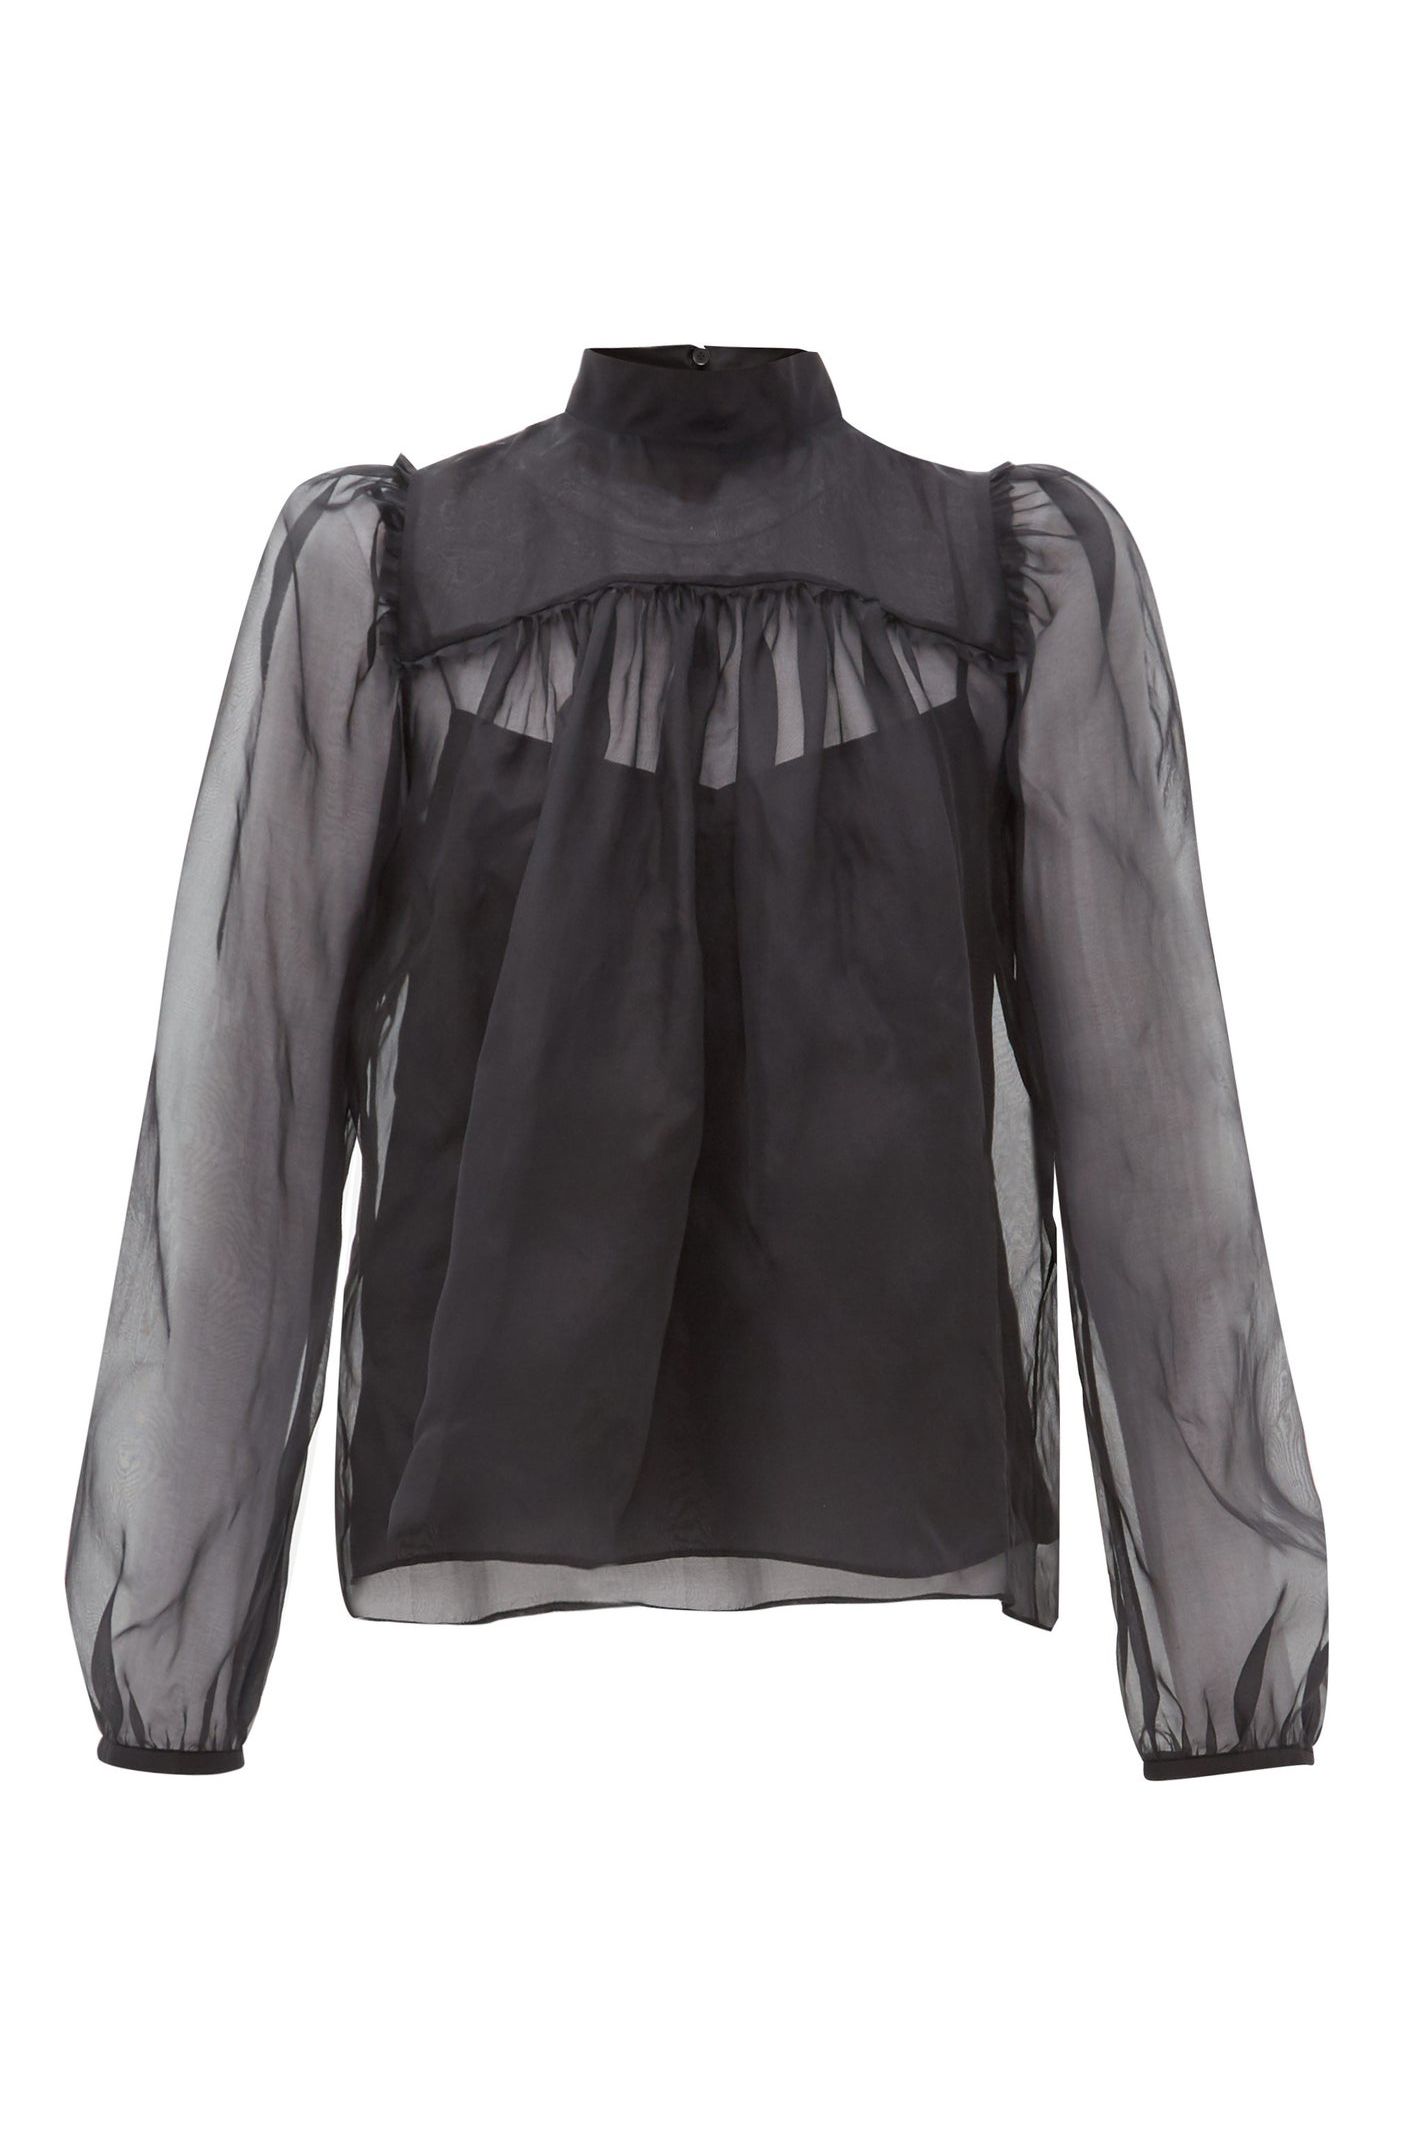 Kleding Dameskleding Tops & T-shirts Blouses Pure blouse/Silk blouse/Sheer top/mesh top/organza blouse 